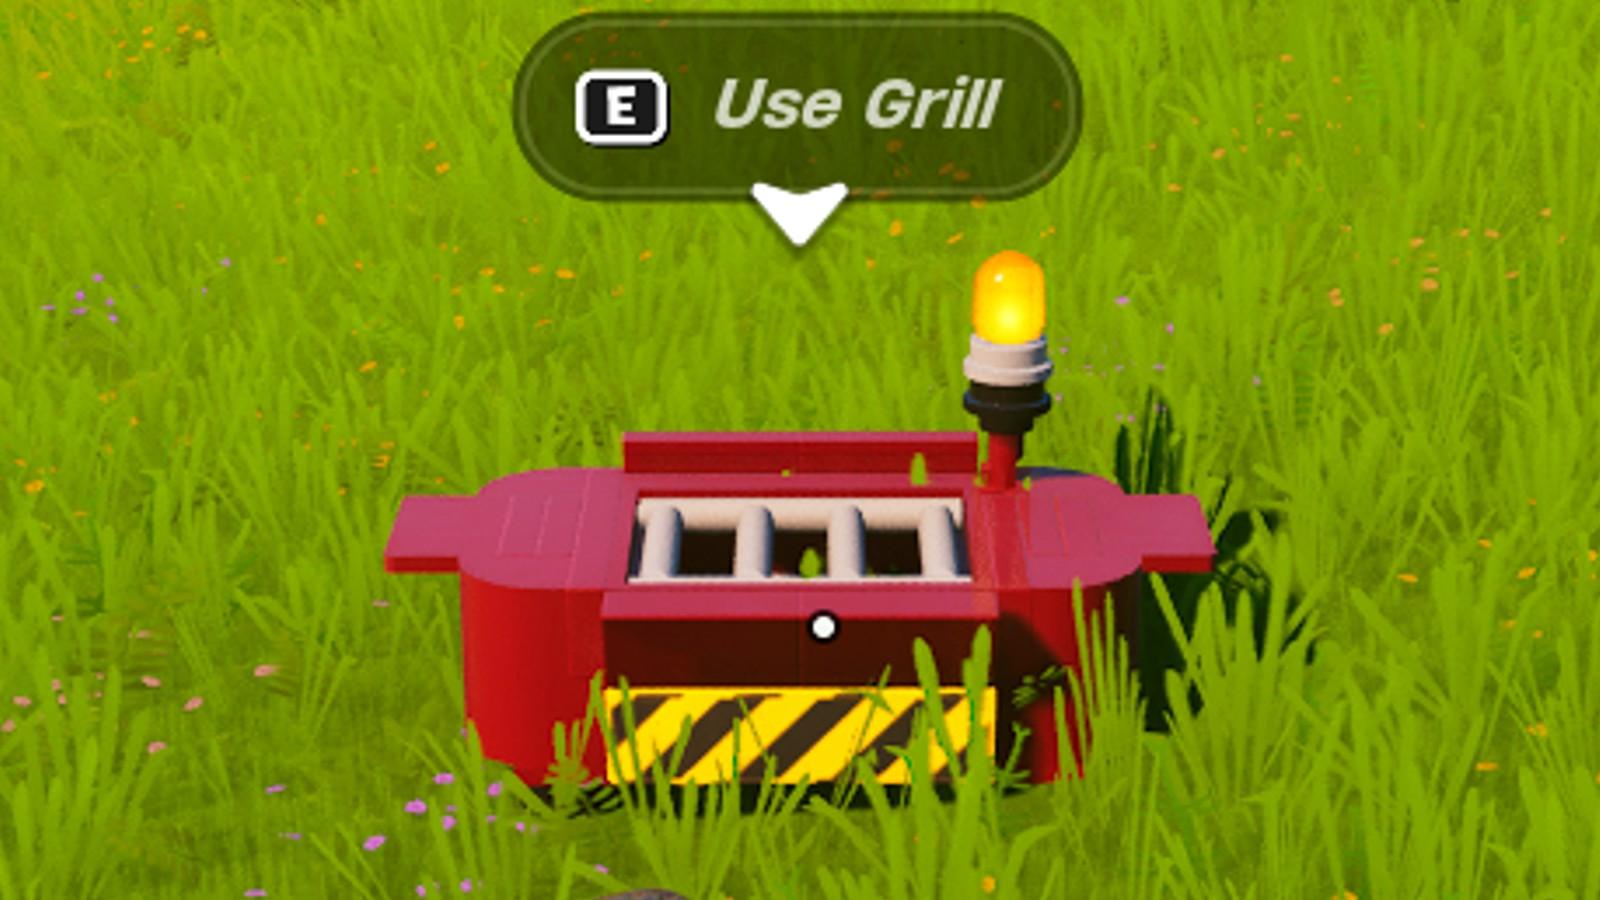 Lego Fortnite Grill